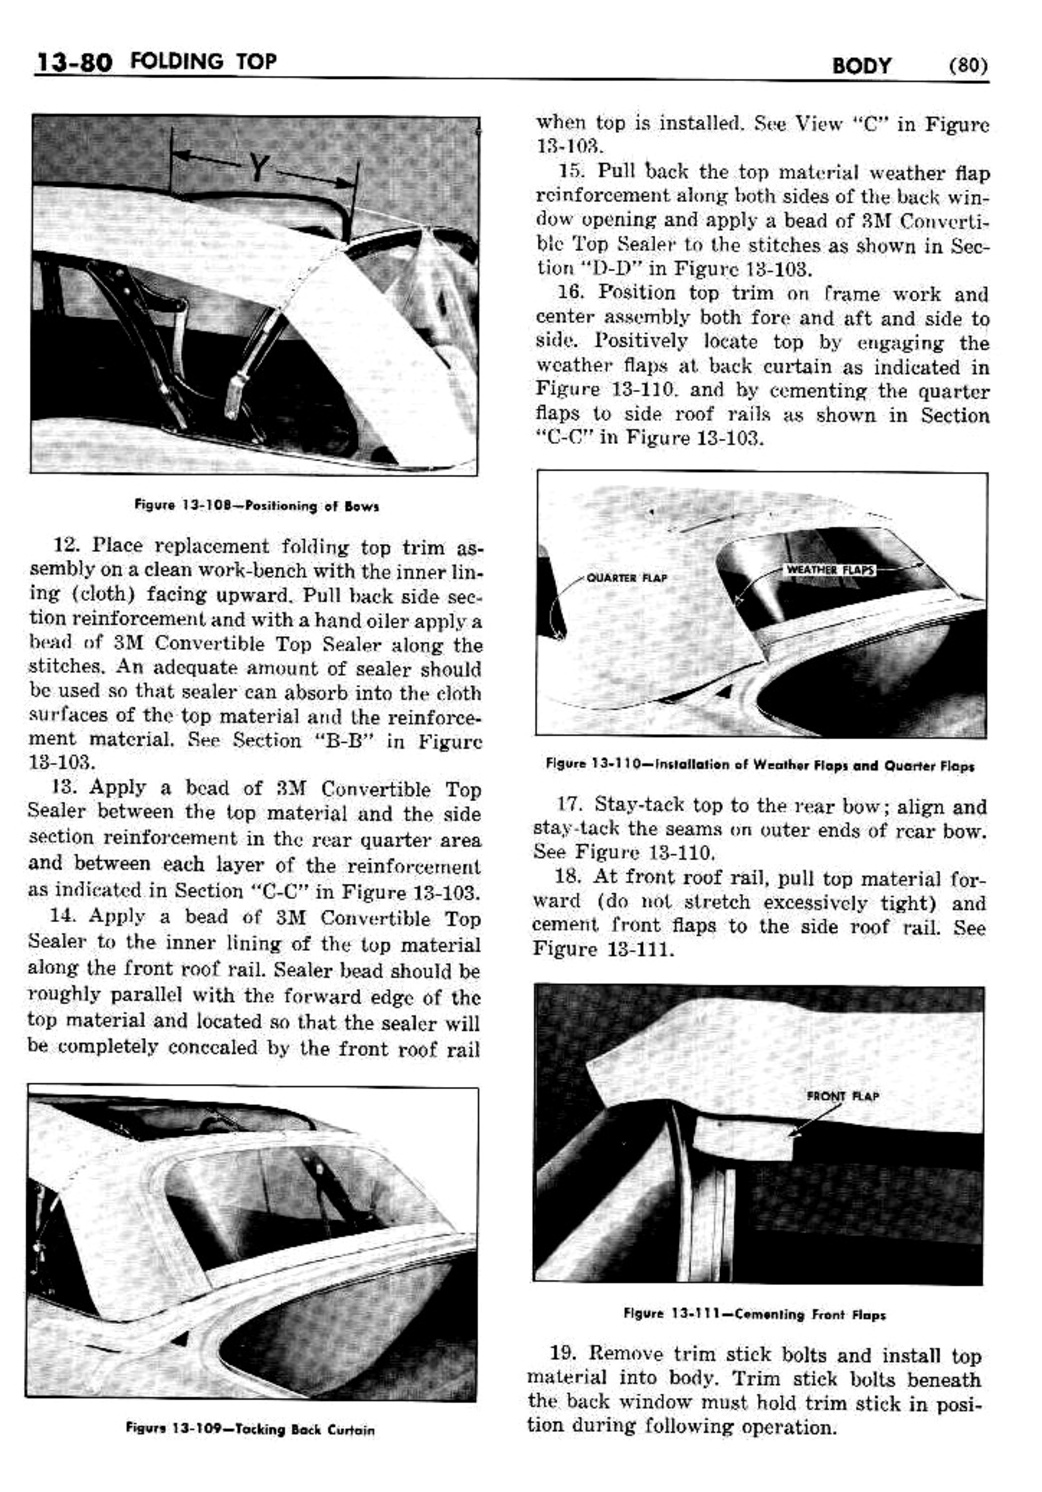 n_1958 Buick Body Service Manual-081-081.jpg